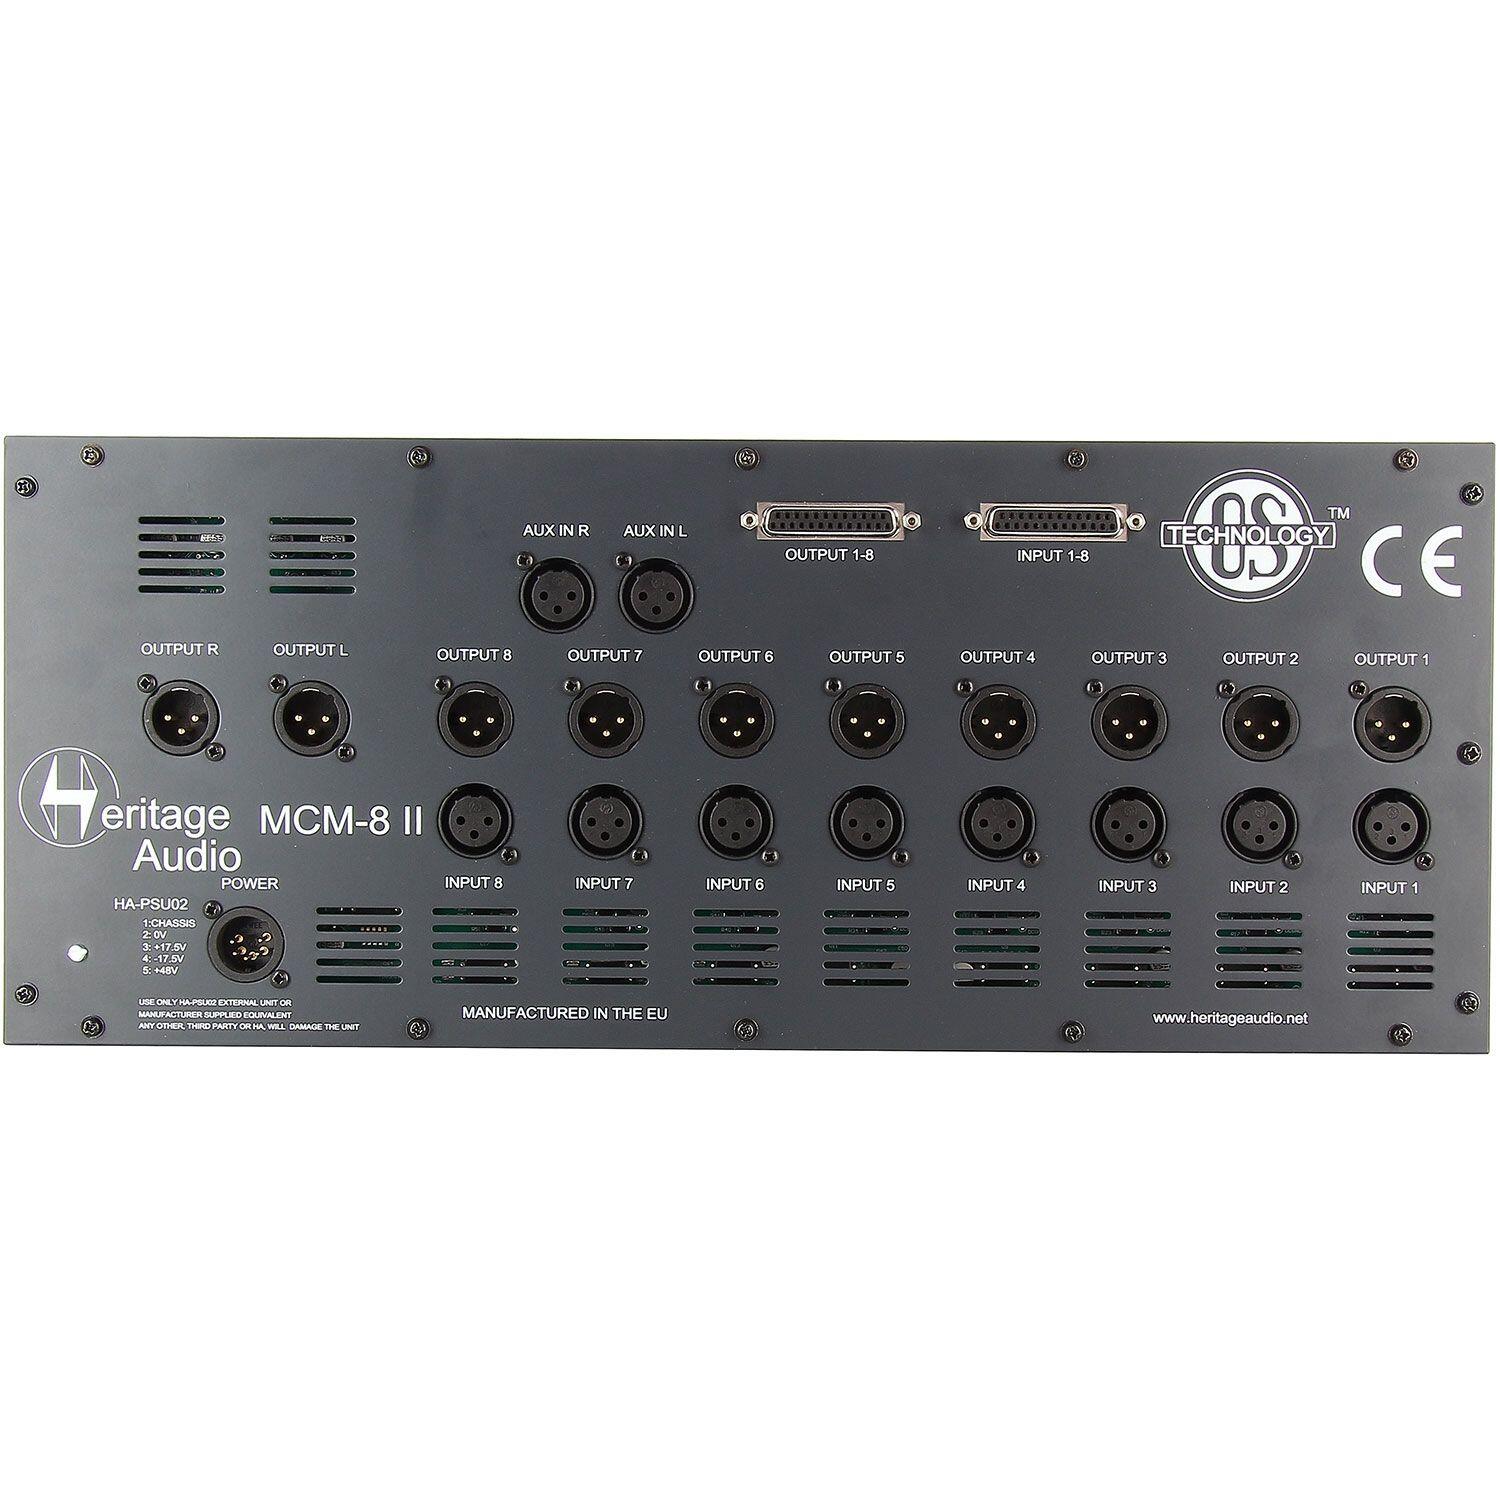 Heritage Audio MCM-8 MK2 500 series rack/summing mixer